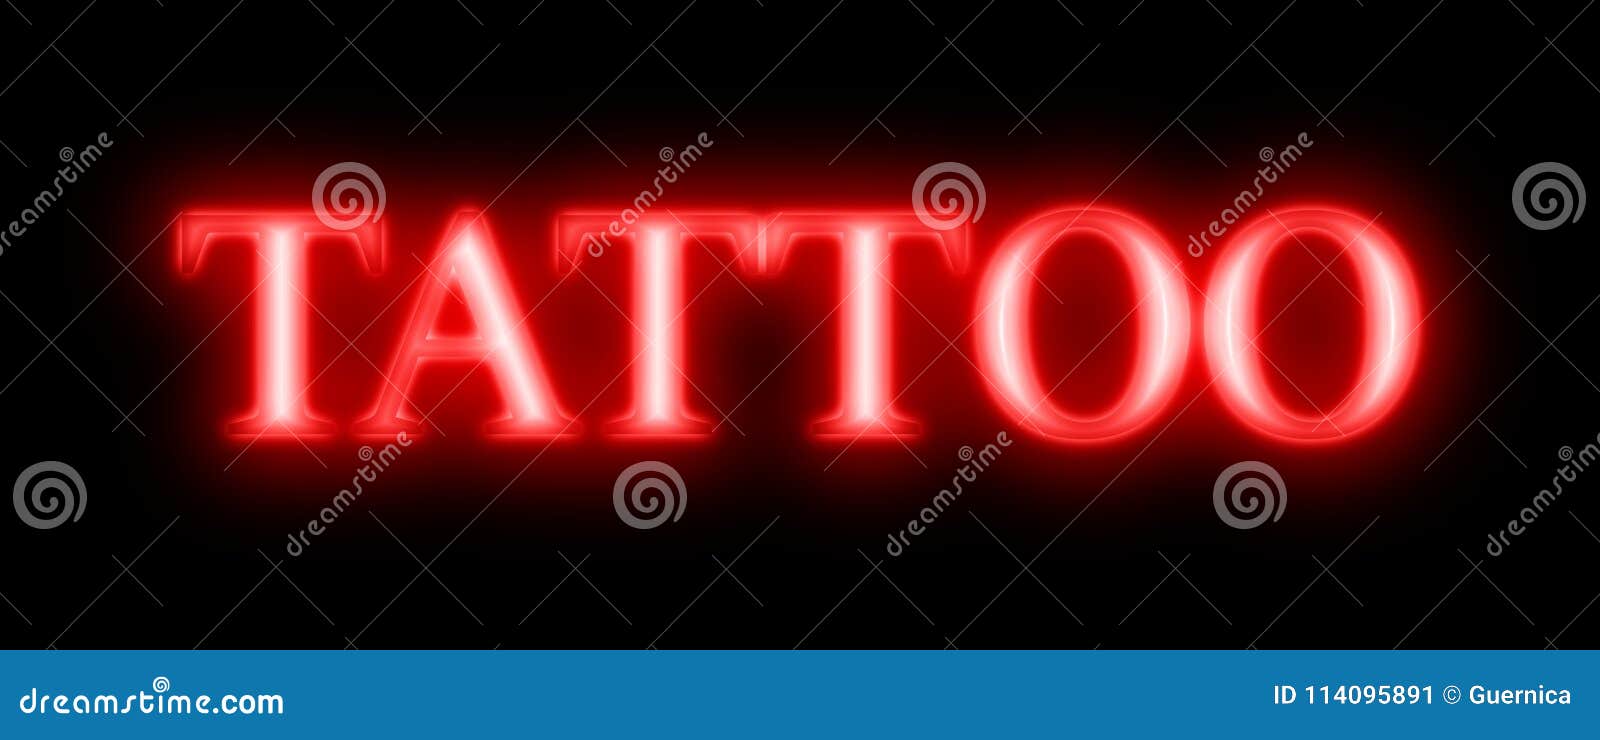 Planzo TATTOO Neon sign light Wall Art Decor for Tattoo Salon Studio Shop  Red 5V  eBay